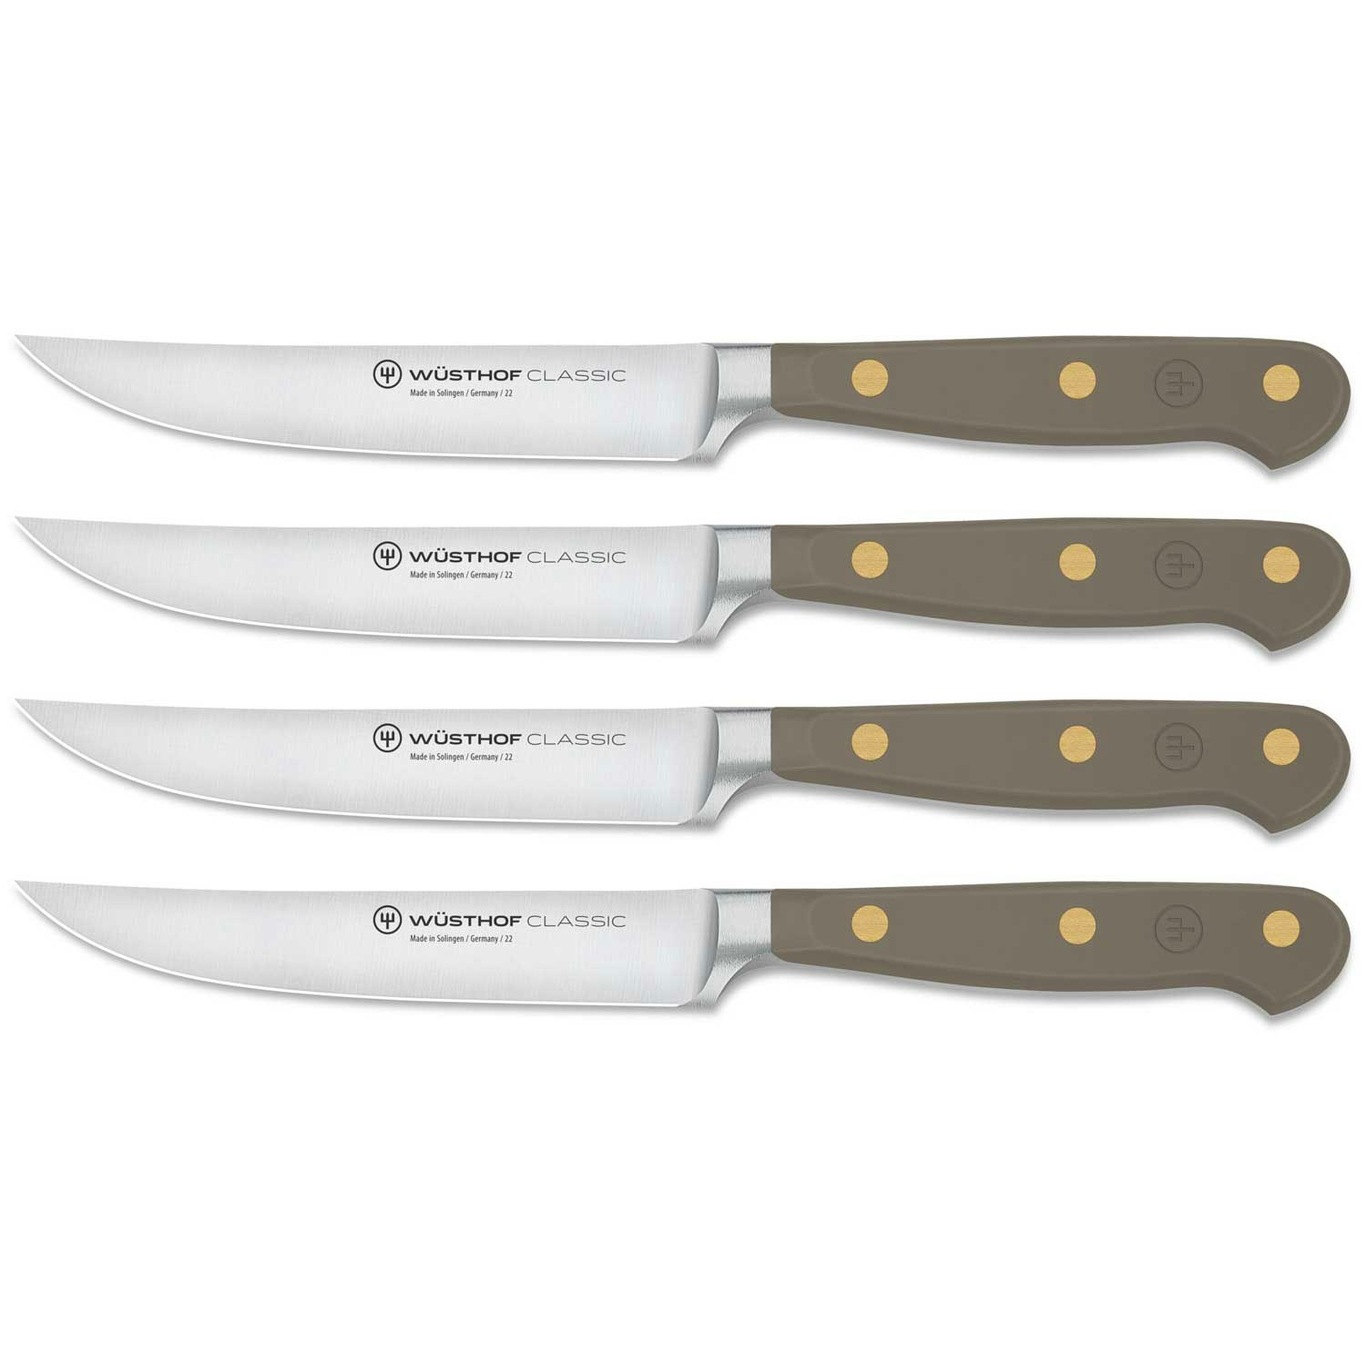 https://royaldesign.com/image/2/wusthof-classic-colour-steak-knives-4-pack-1?w=800&quality=80